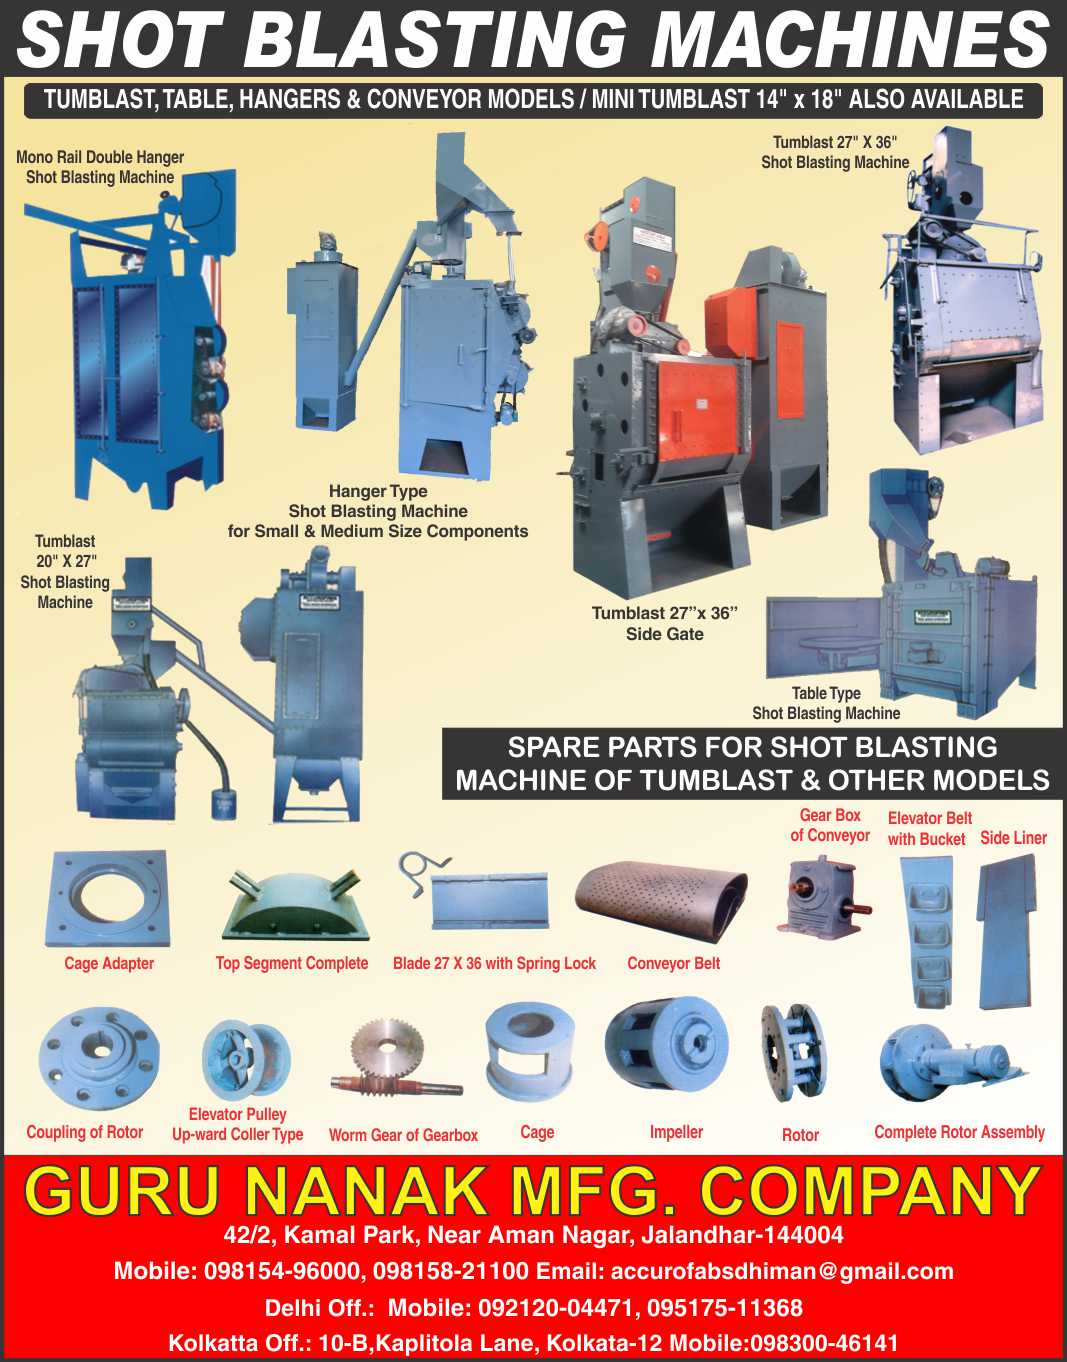 Guru Nanak Mfg. Company